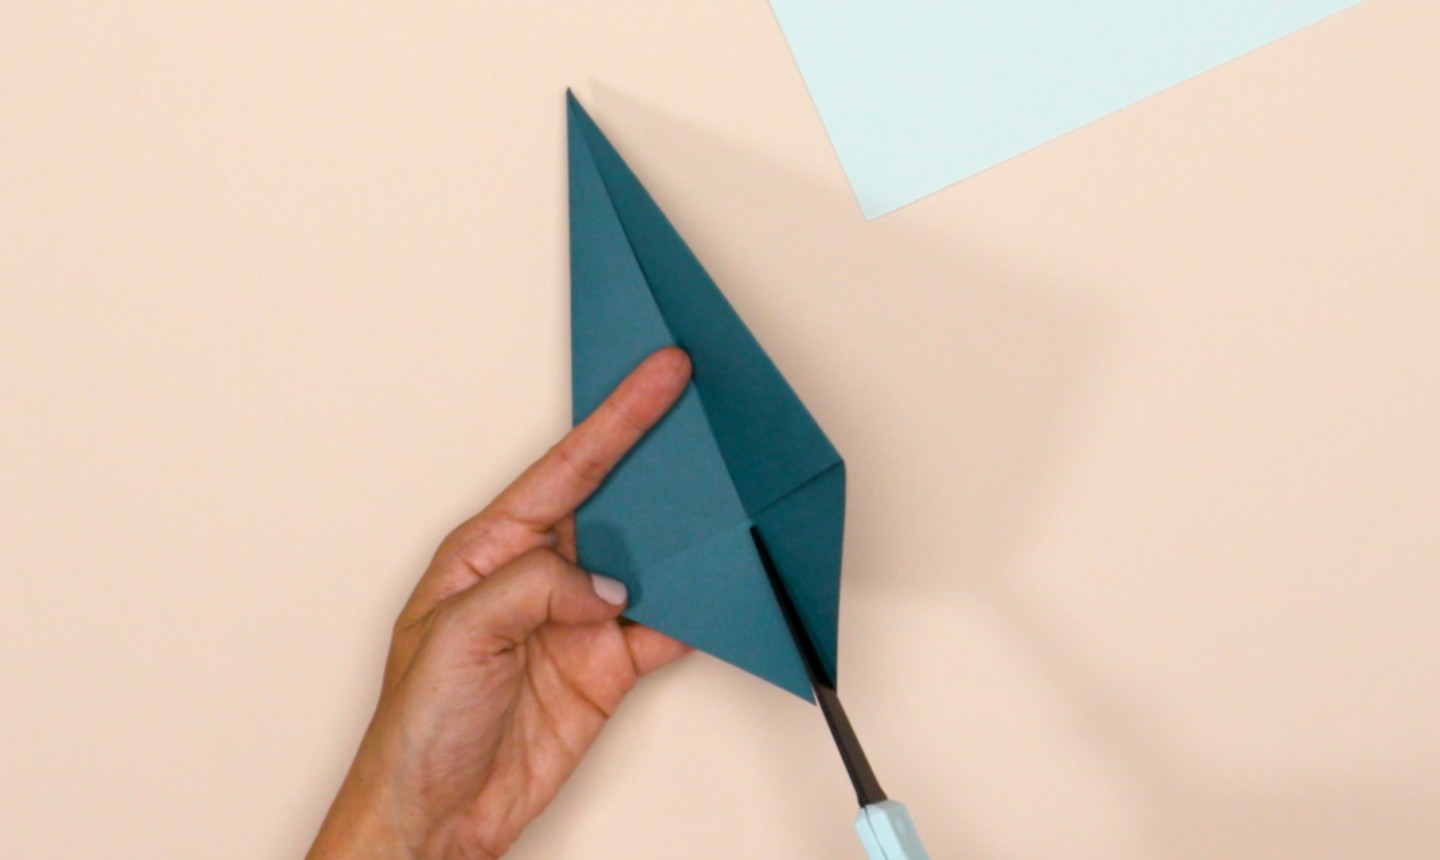 Transform Walls With Origami Wall Art | Craftsy